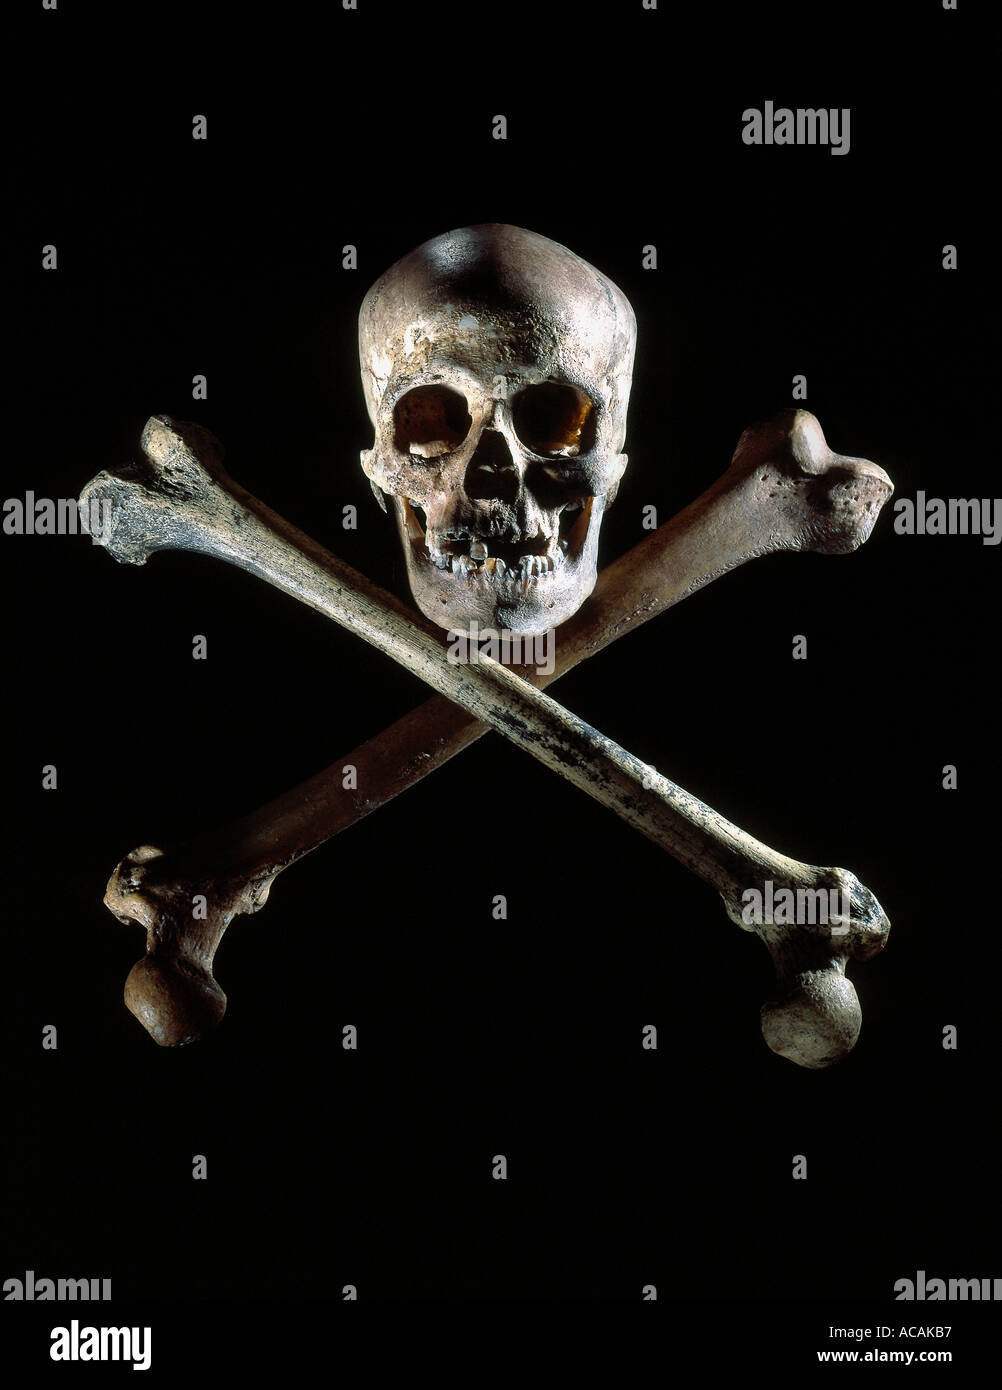 Skull and cross bones on black background. Studio location Stock Photo